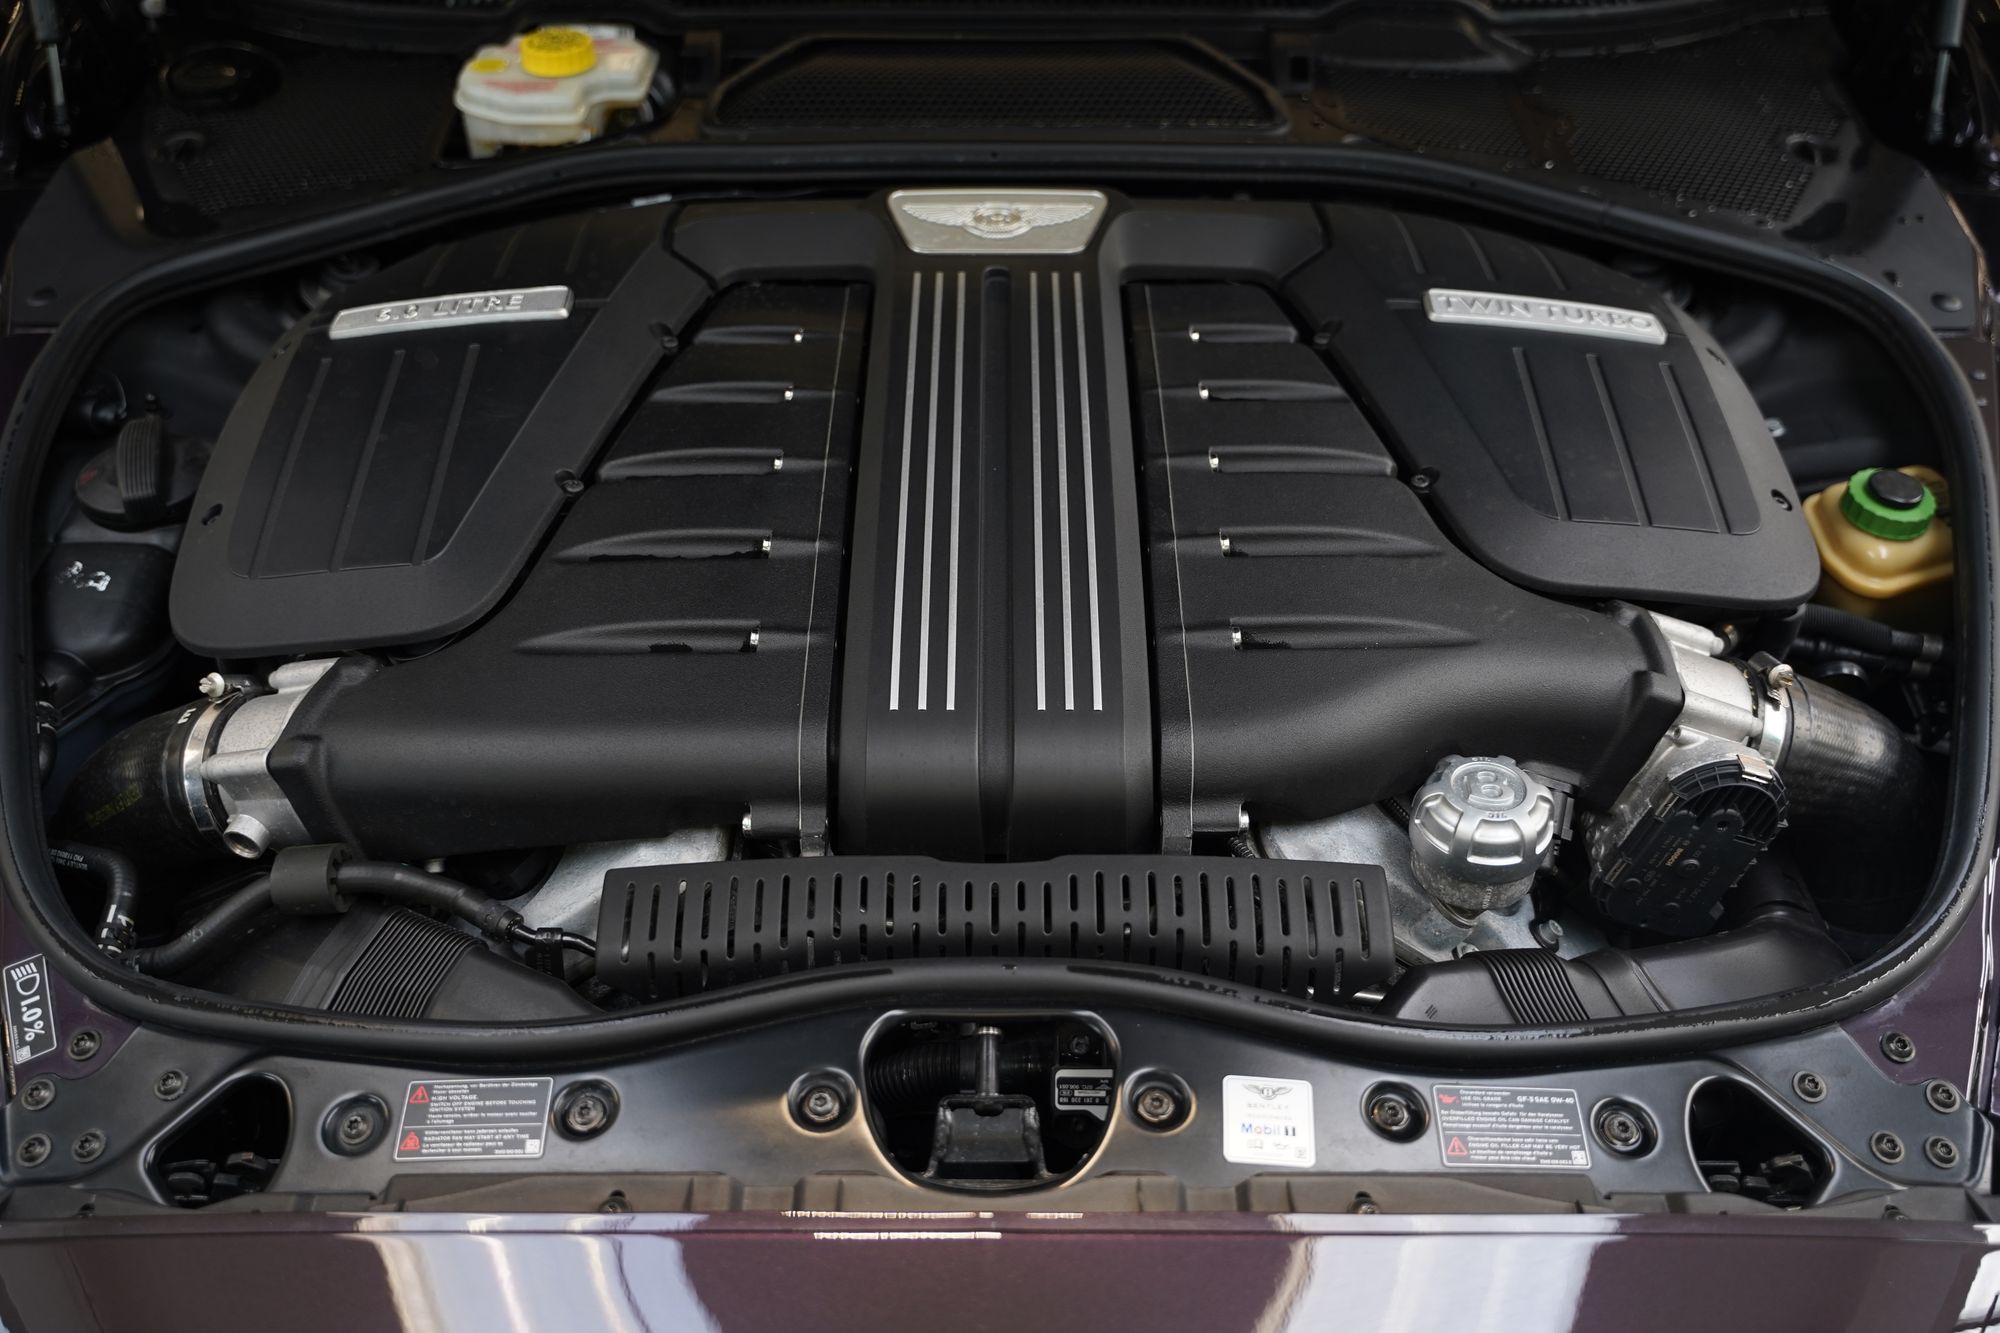 2016 Bentley Continental GT Speed Black Edition